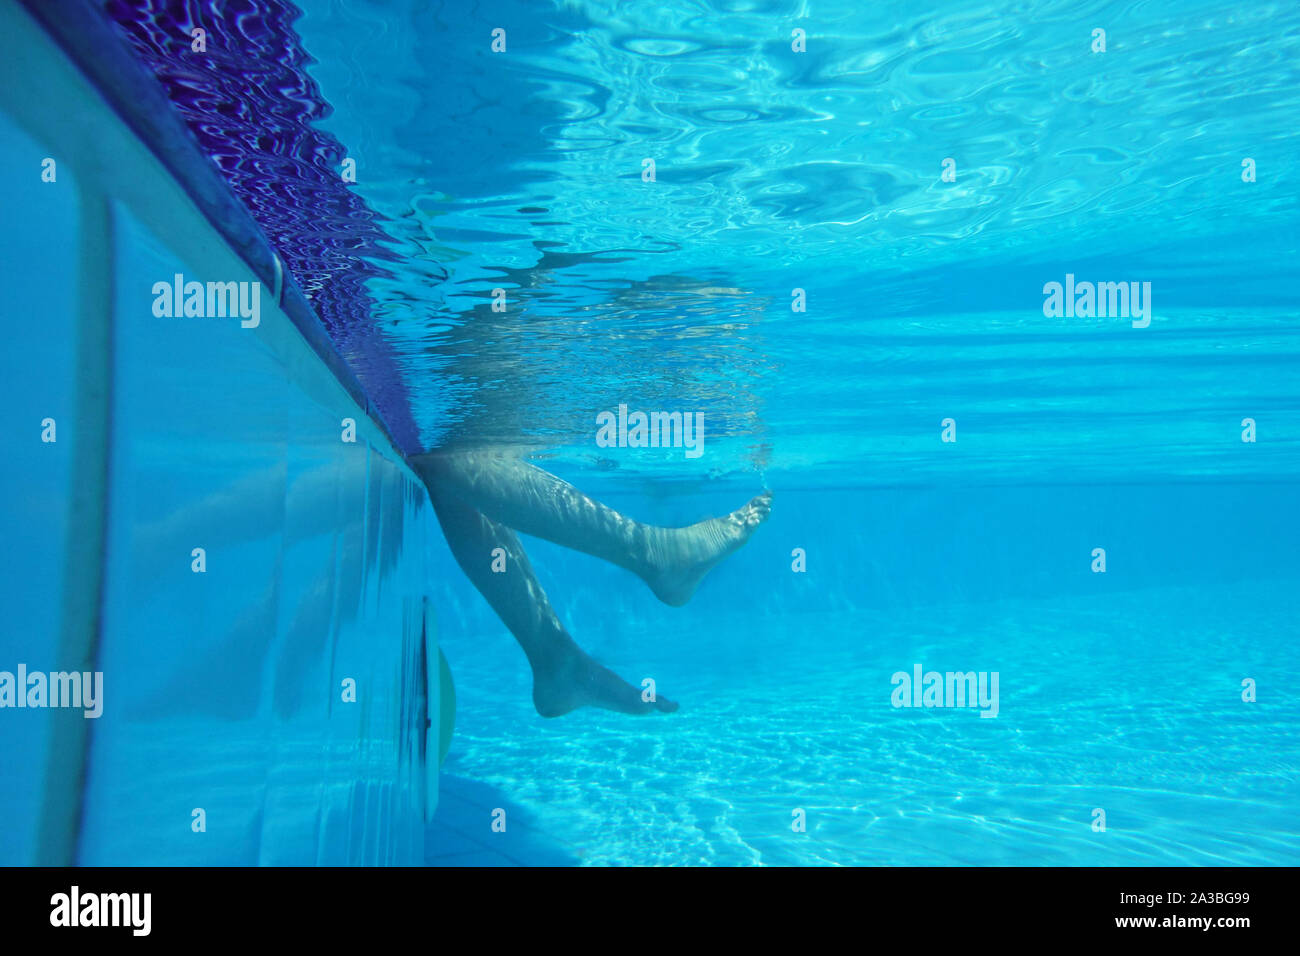 Underwater shot of legs on pool side Stock Photo